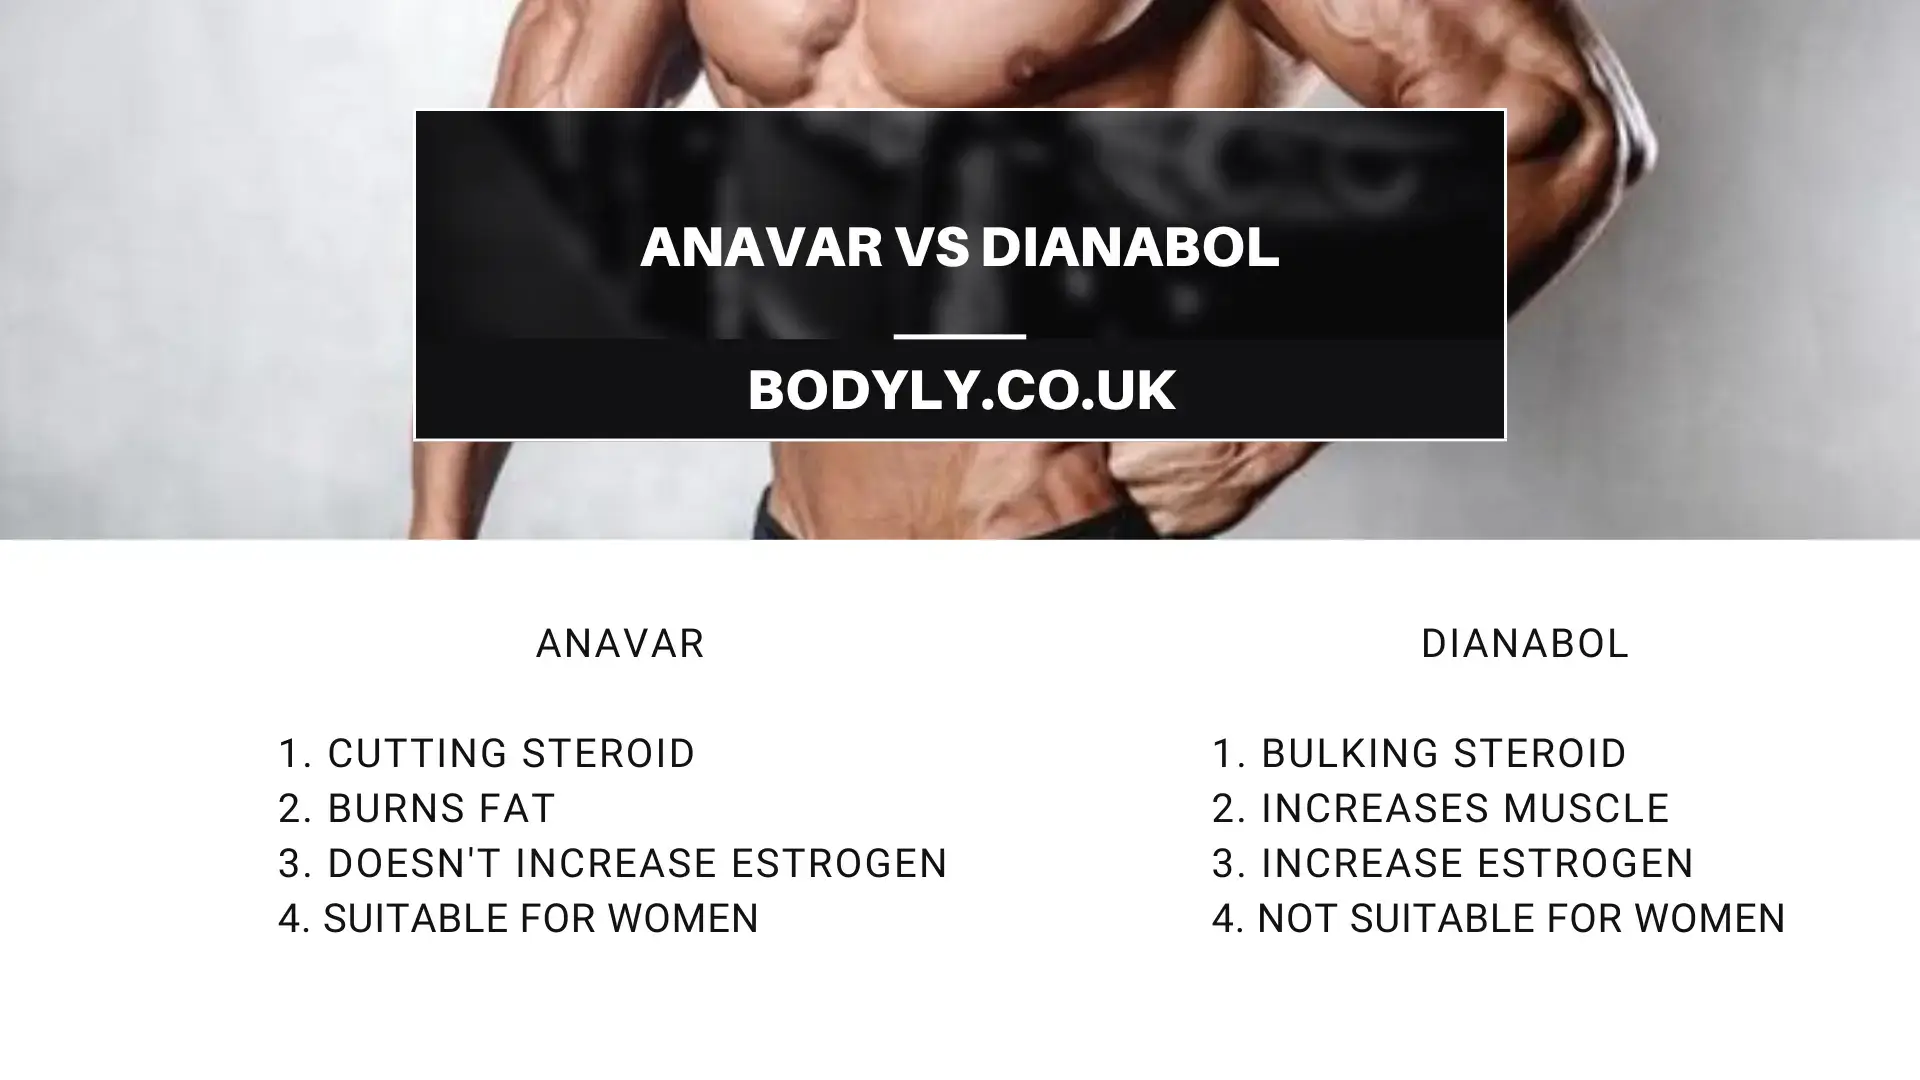 Dianabol vs Anavar